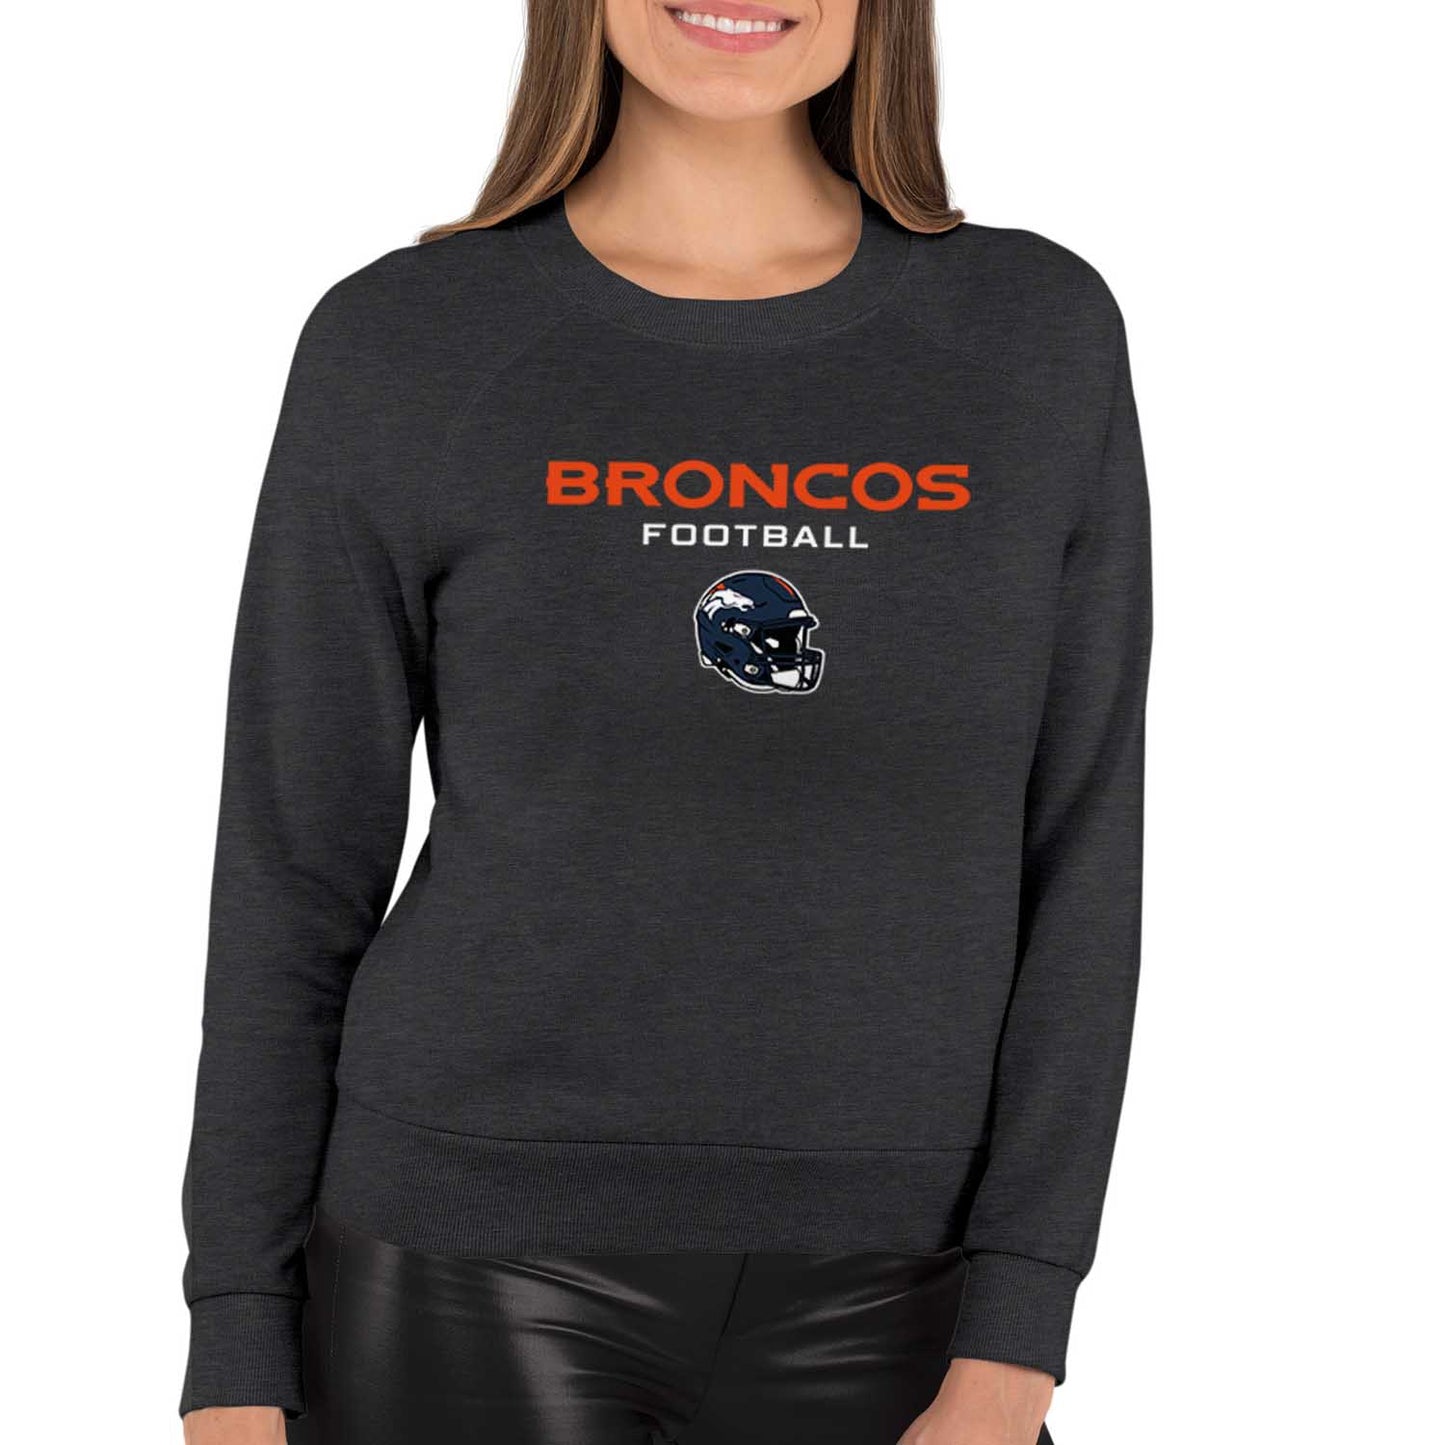 Denver Broncos Women's NFL Football Helmet Charcoal Slouchy Crewneck -Tagless Lightweight Pullover - Charcoal